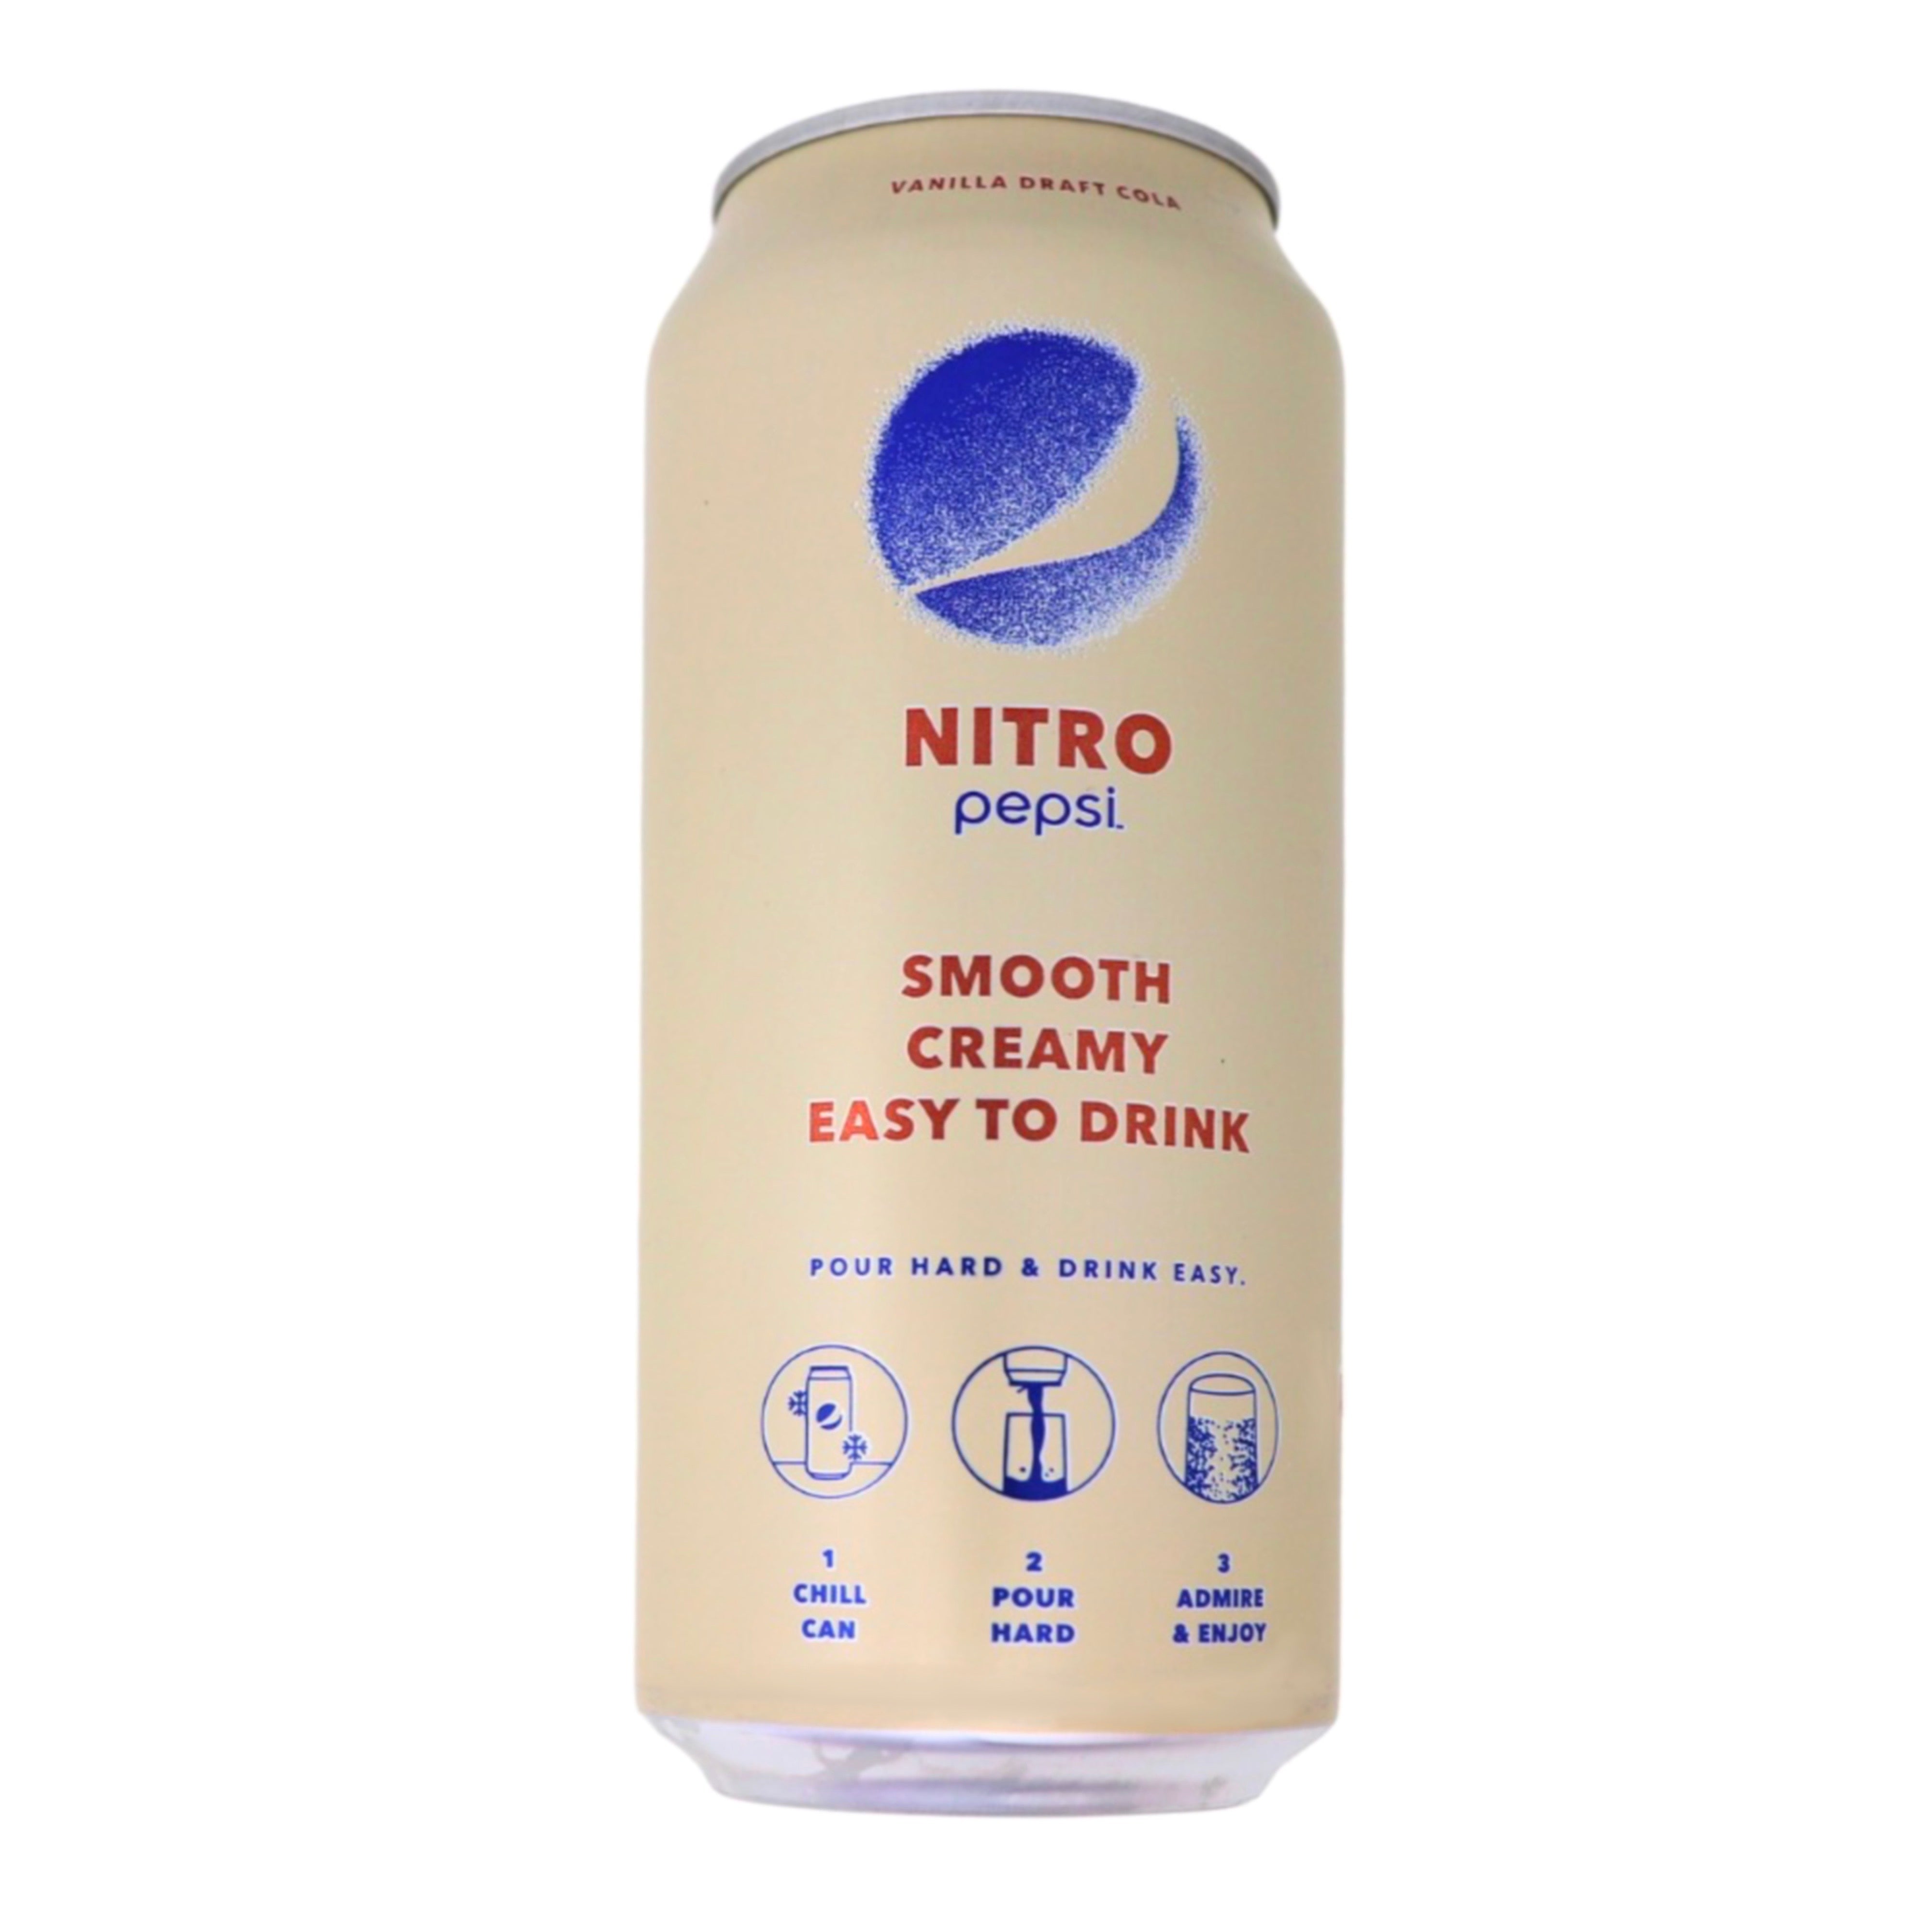 Pepsi Nitro Vanilla Draft Cola - Pepsi Nitro - Candy Funhouse